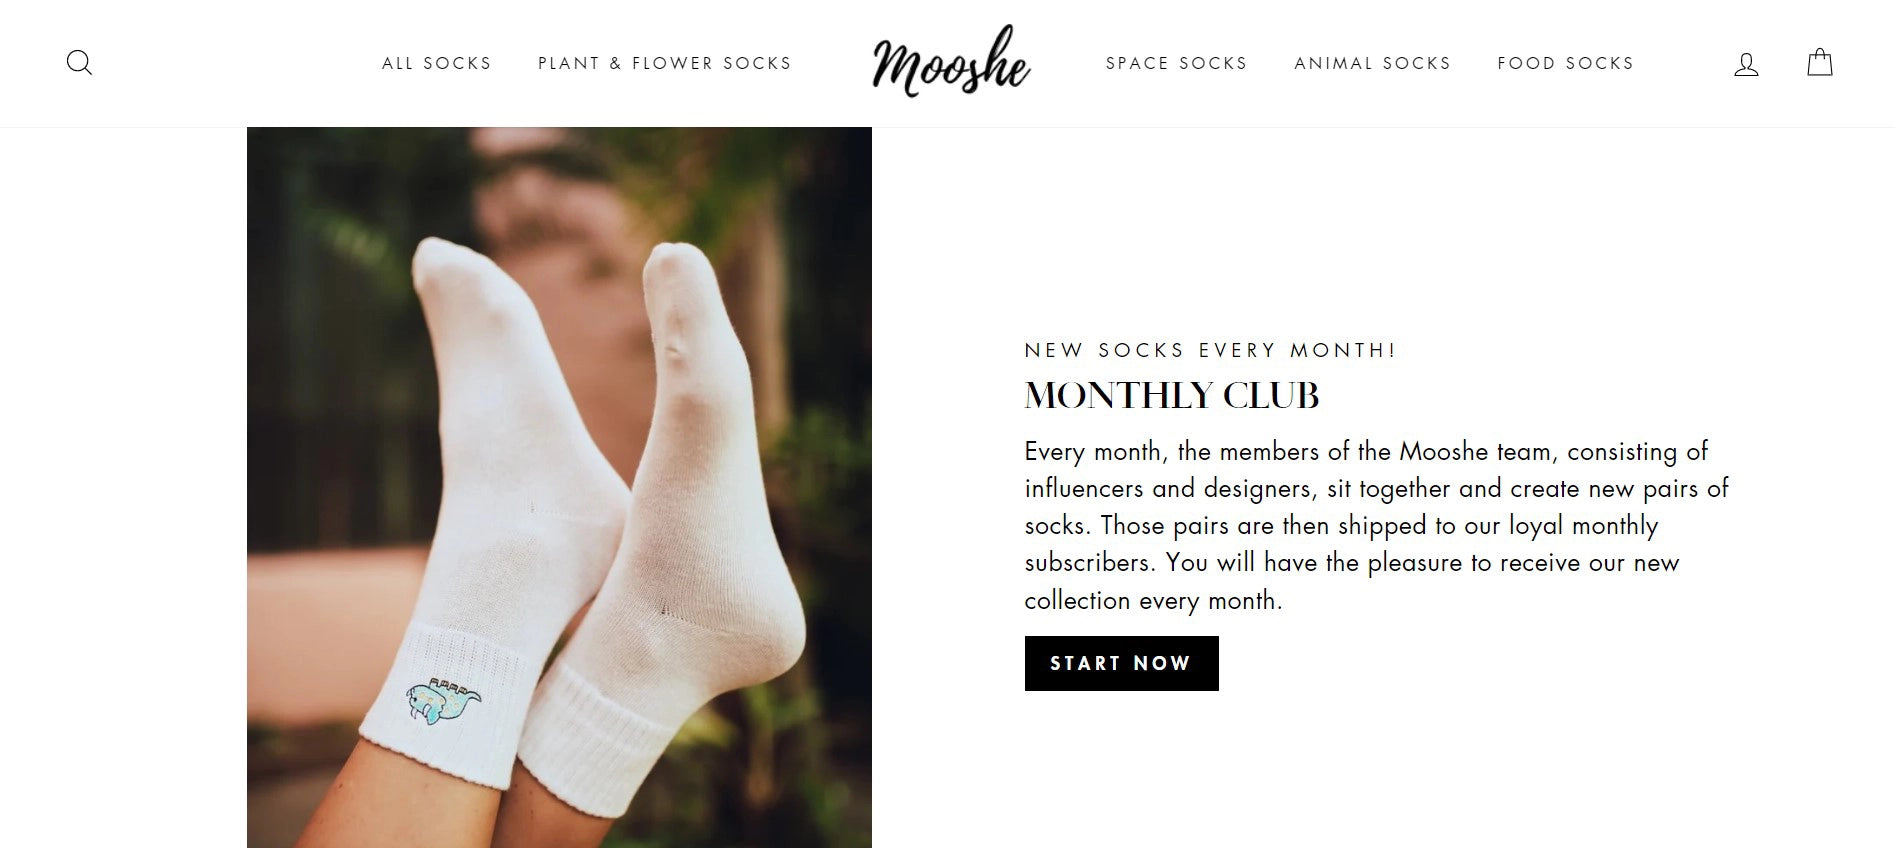 Mooshe socks’ Monthly Club subscription offer